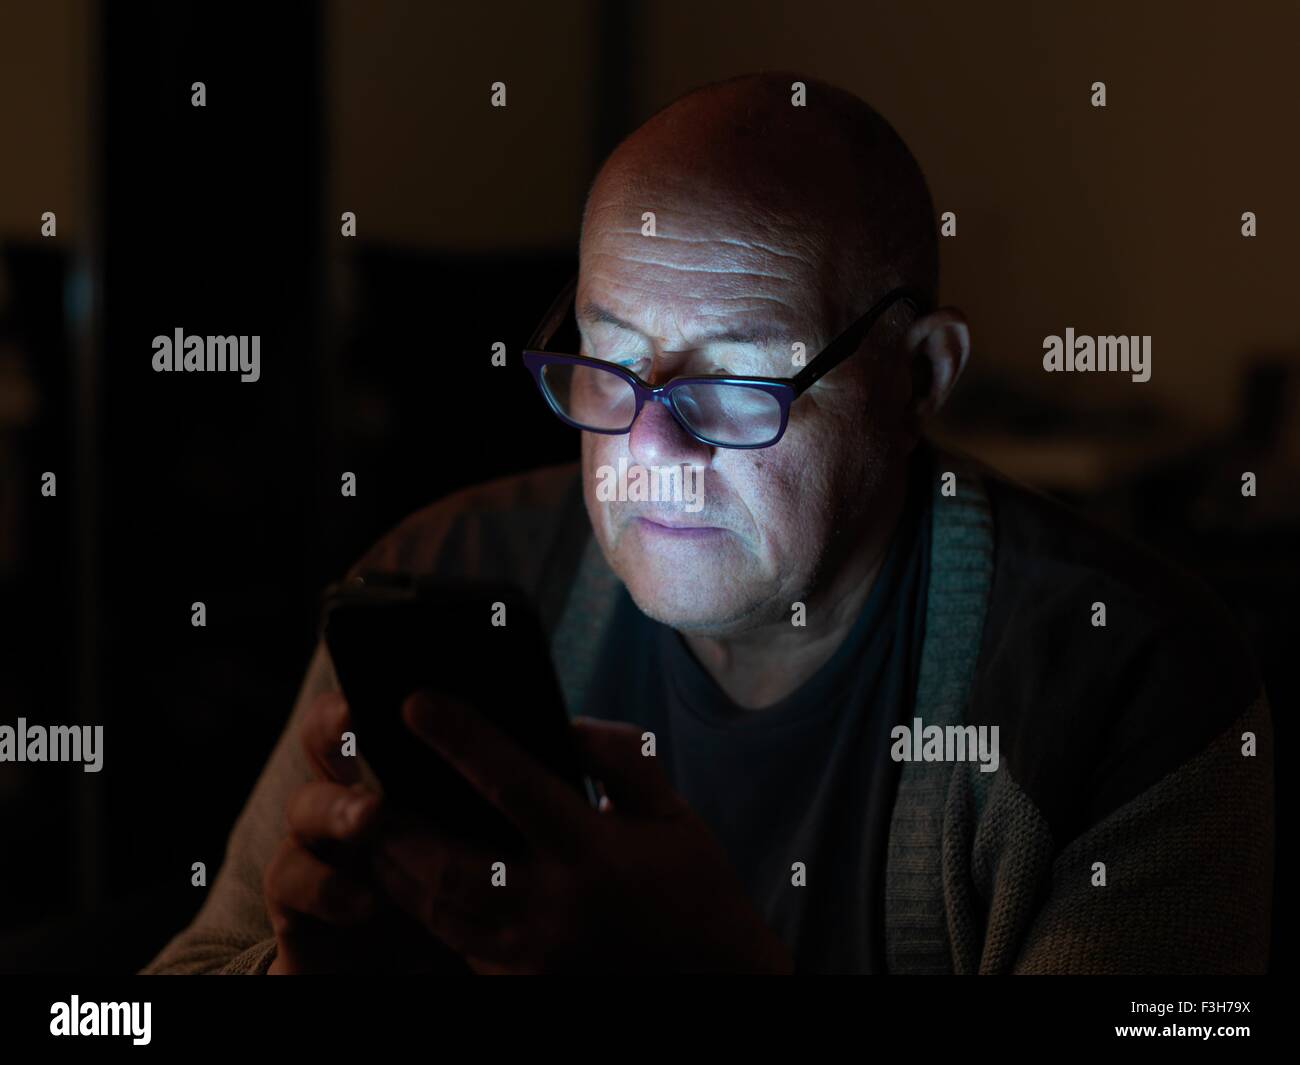 Mature man using smartphone at night, face illuminated Stock Photo